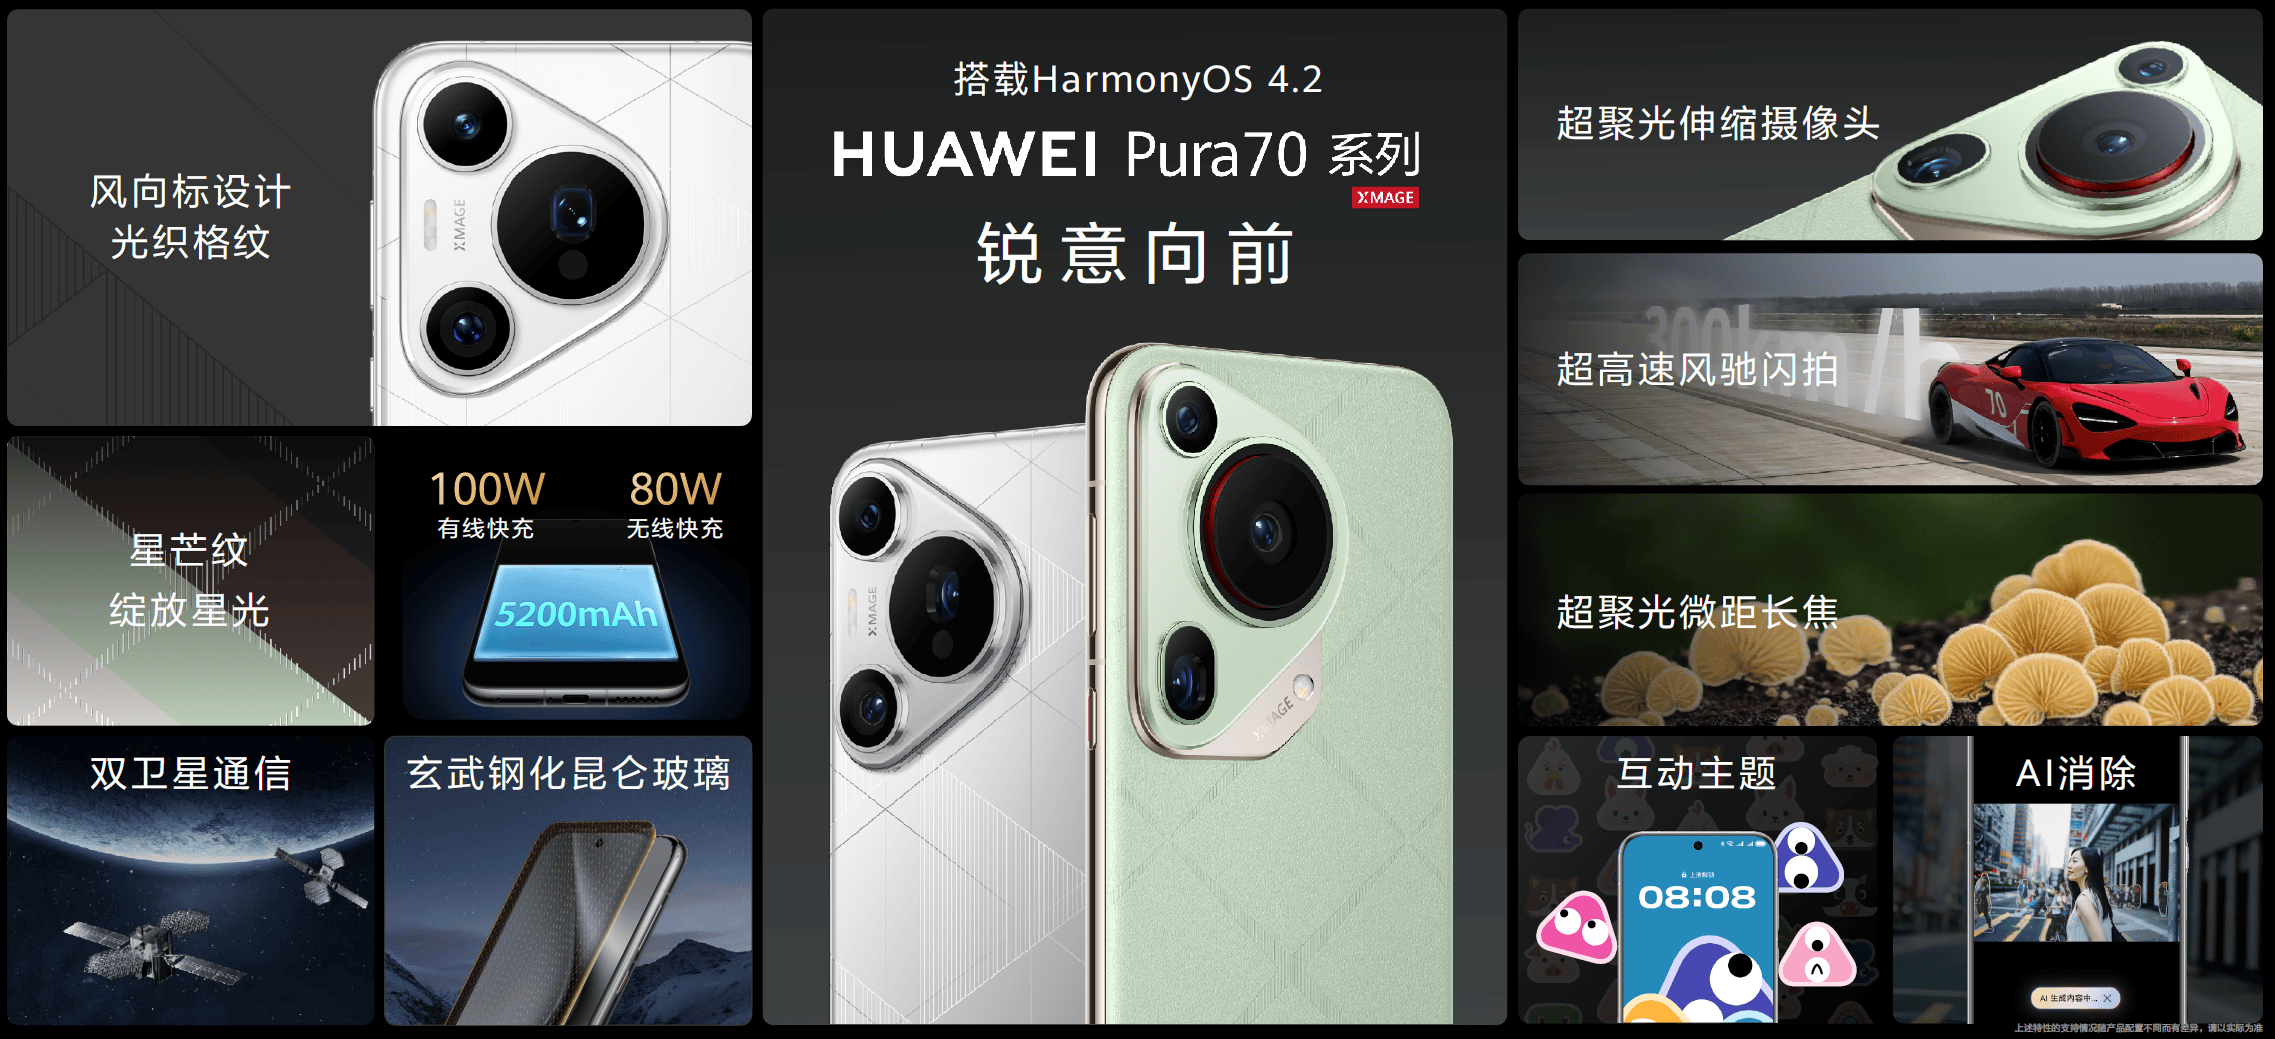 HUAWEI Pura 70 Ultra搭载Harmony OS 4.2，更好玩，更强大-最极客